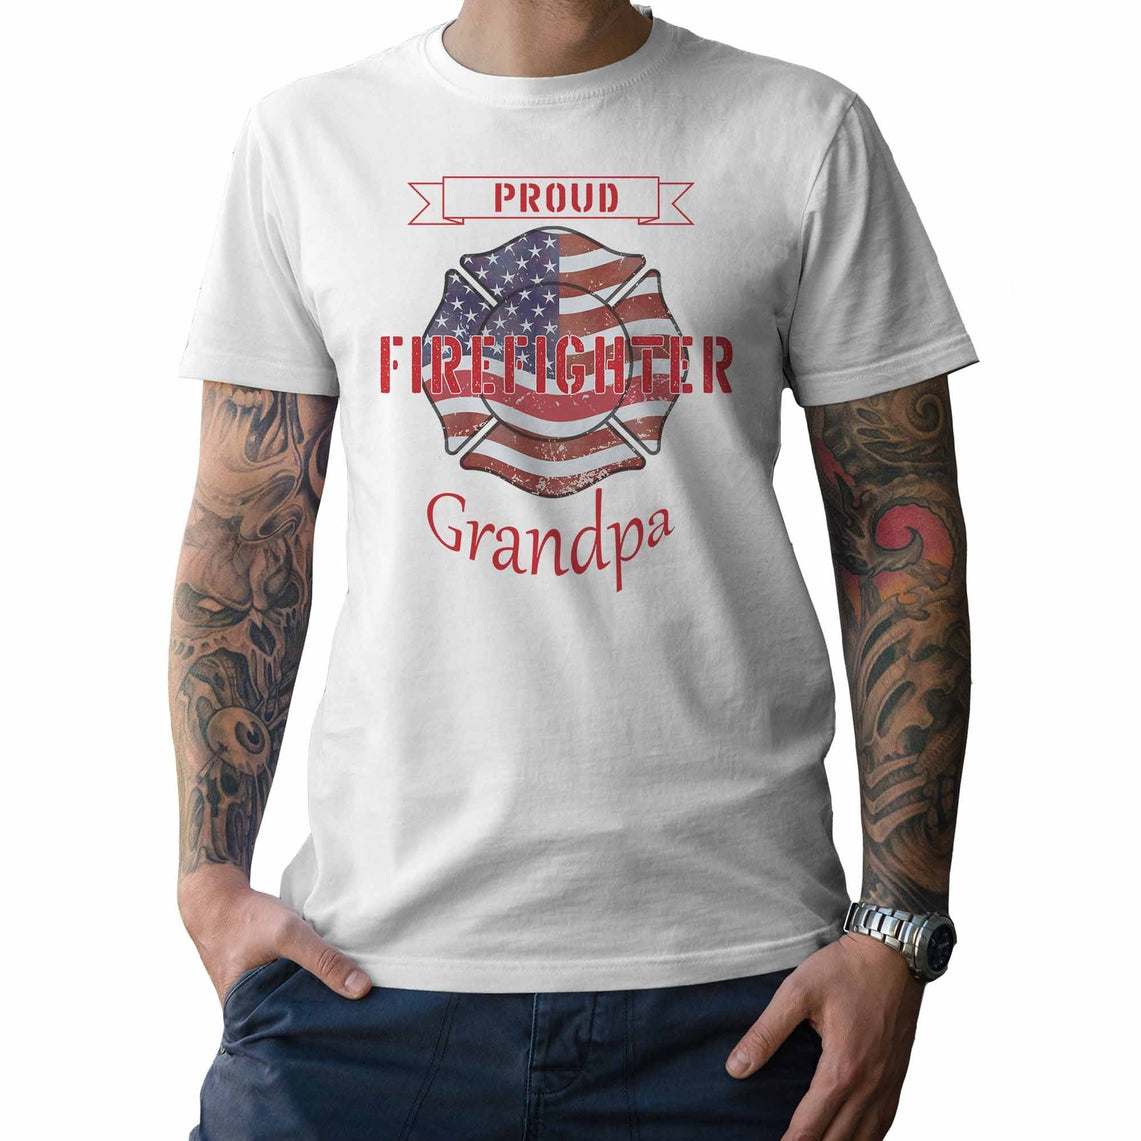 Proud Firefighter Grandpa - My Custom Tee Party